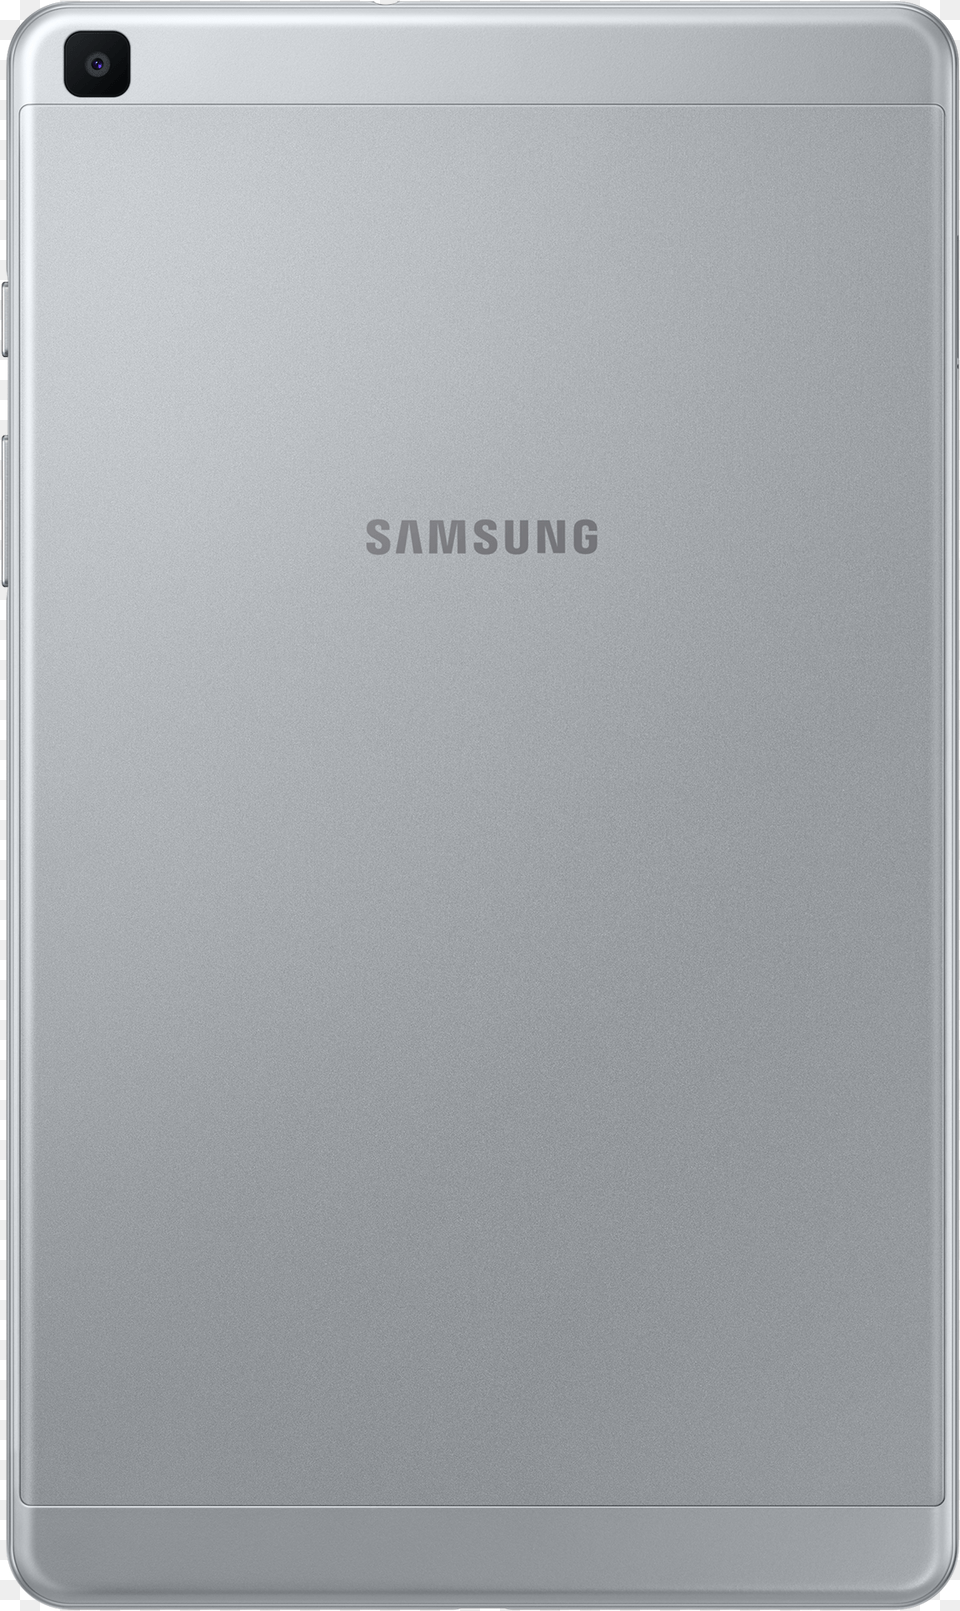 Rip Galaxy Tab S5 Samsung Tab A, Electronics, Mobile Phone, Phone, Computer Png Image